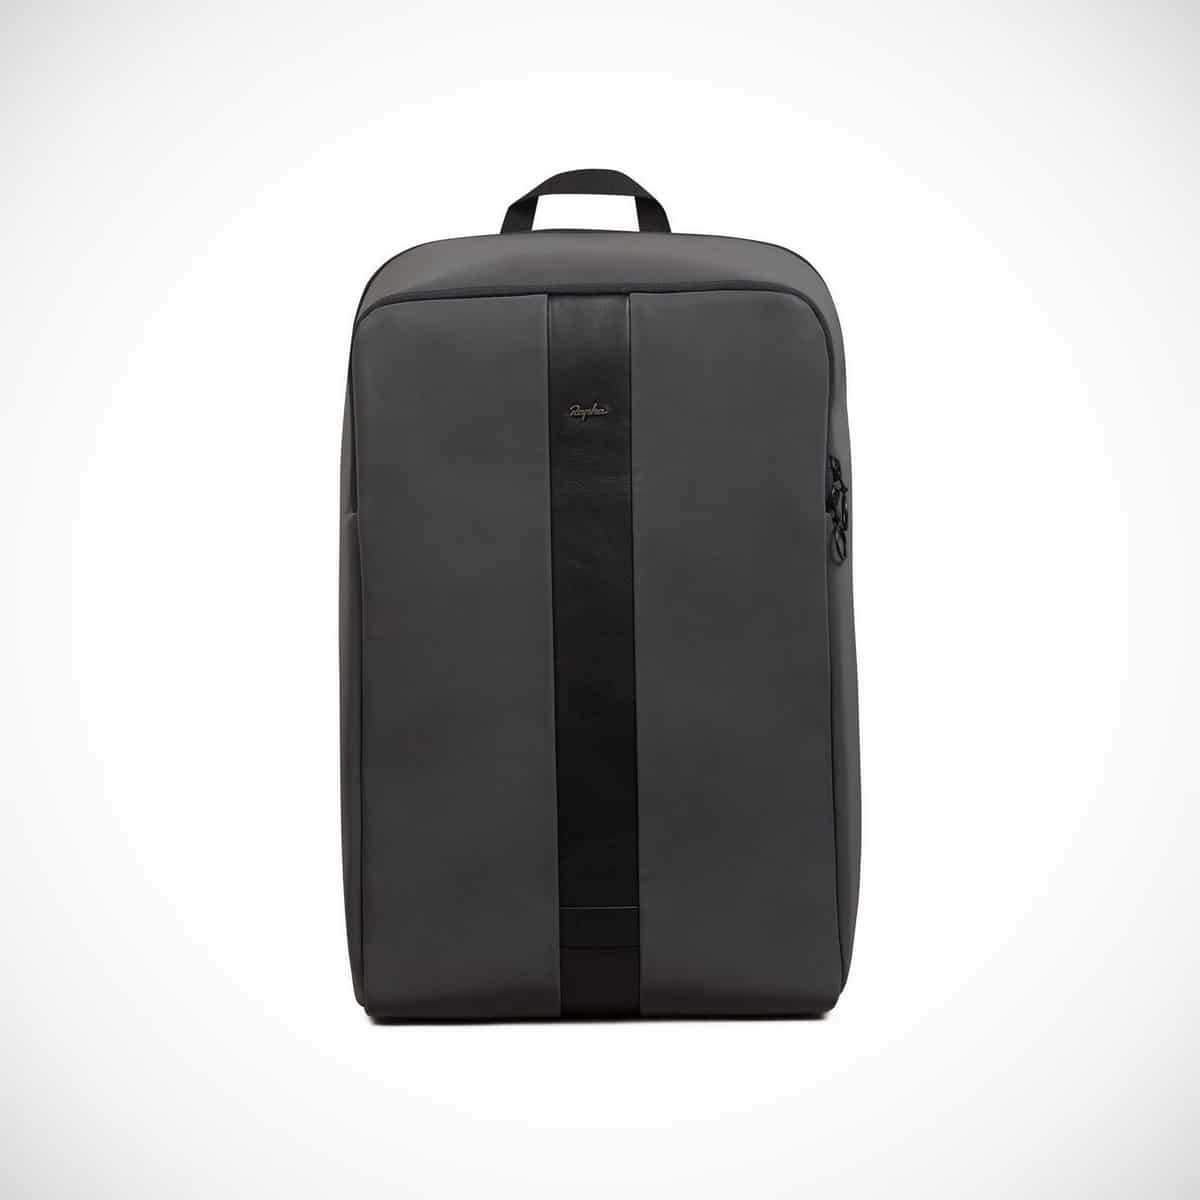 Rapha Travel Leather-Trimmed Reflective Nylon Backpack